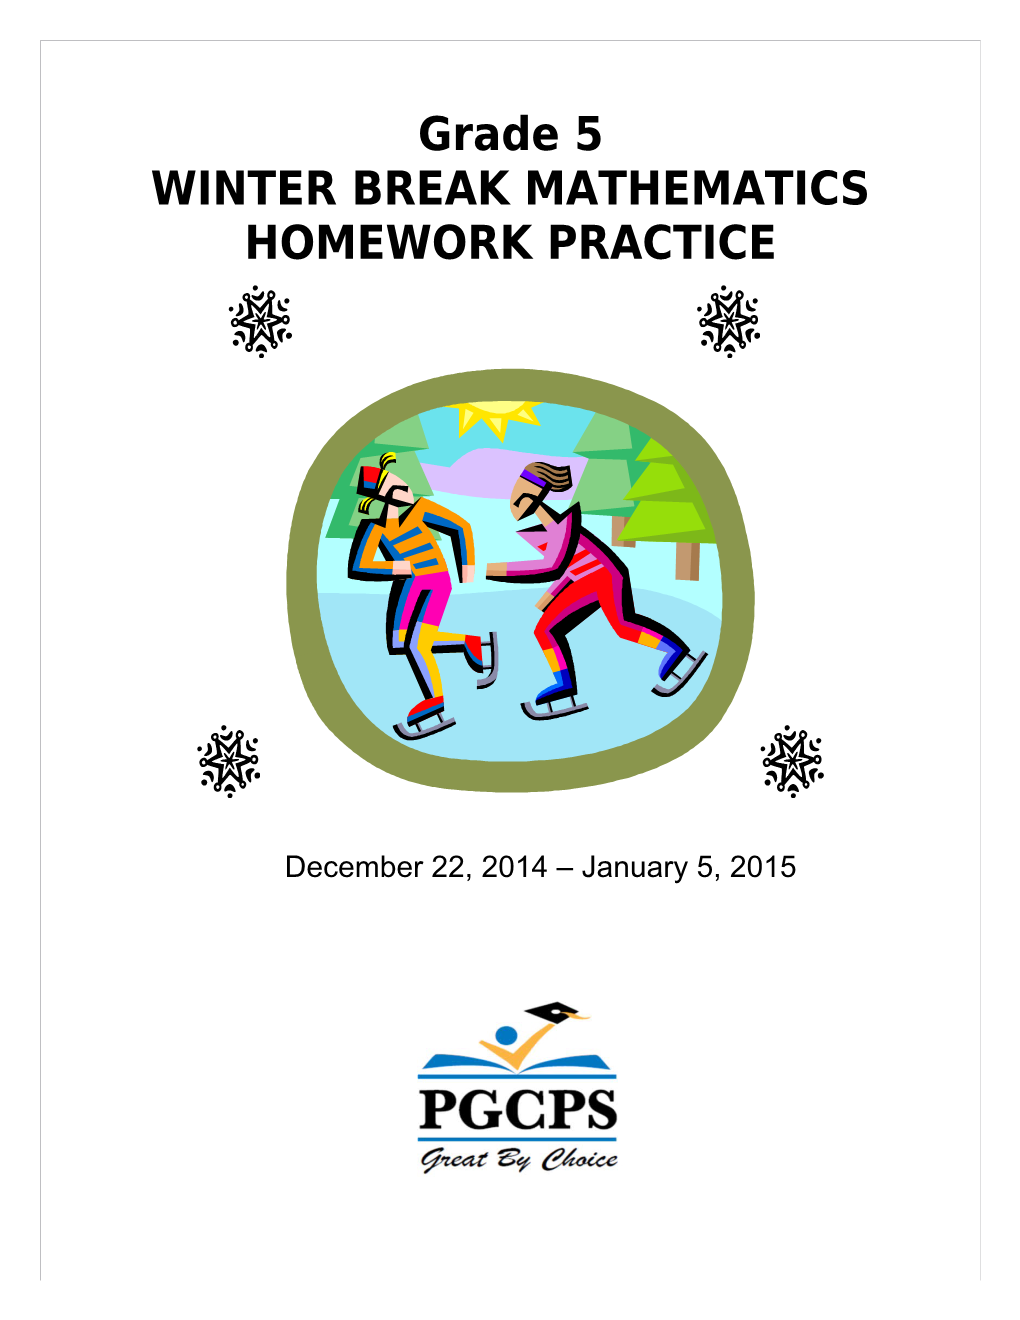 Winter Break Mathematics Homework Practice